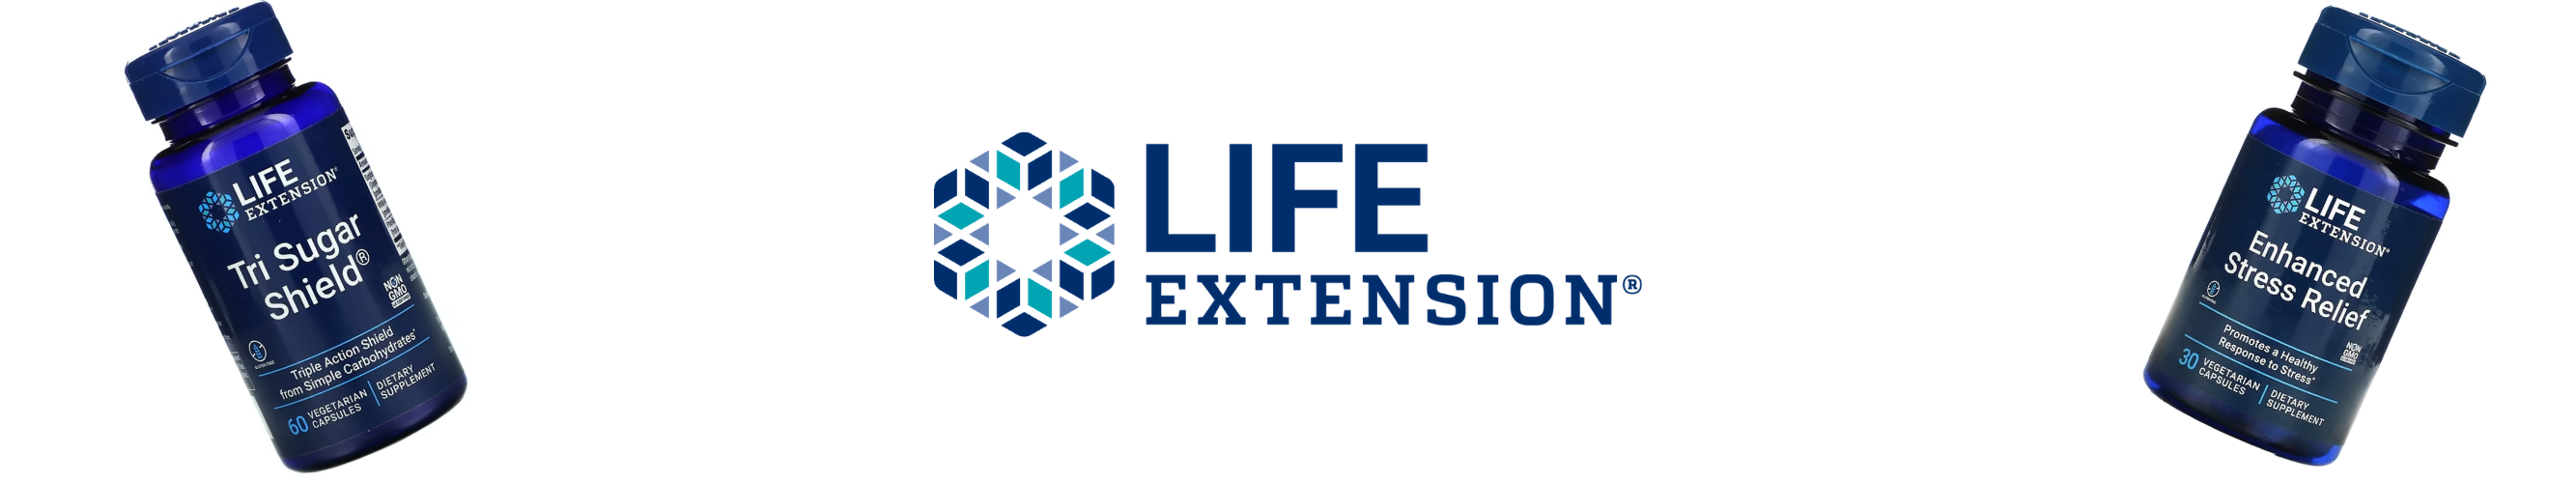 HiLife Vitamins | Life Extension